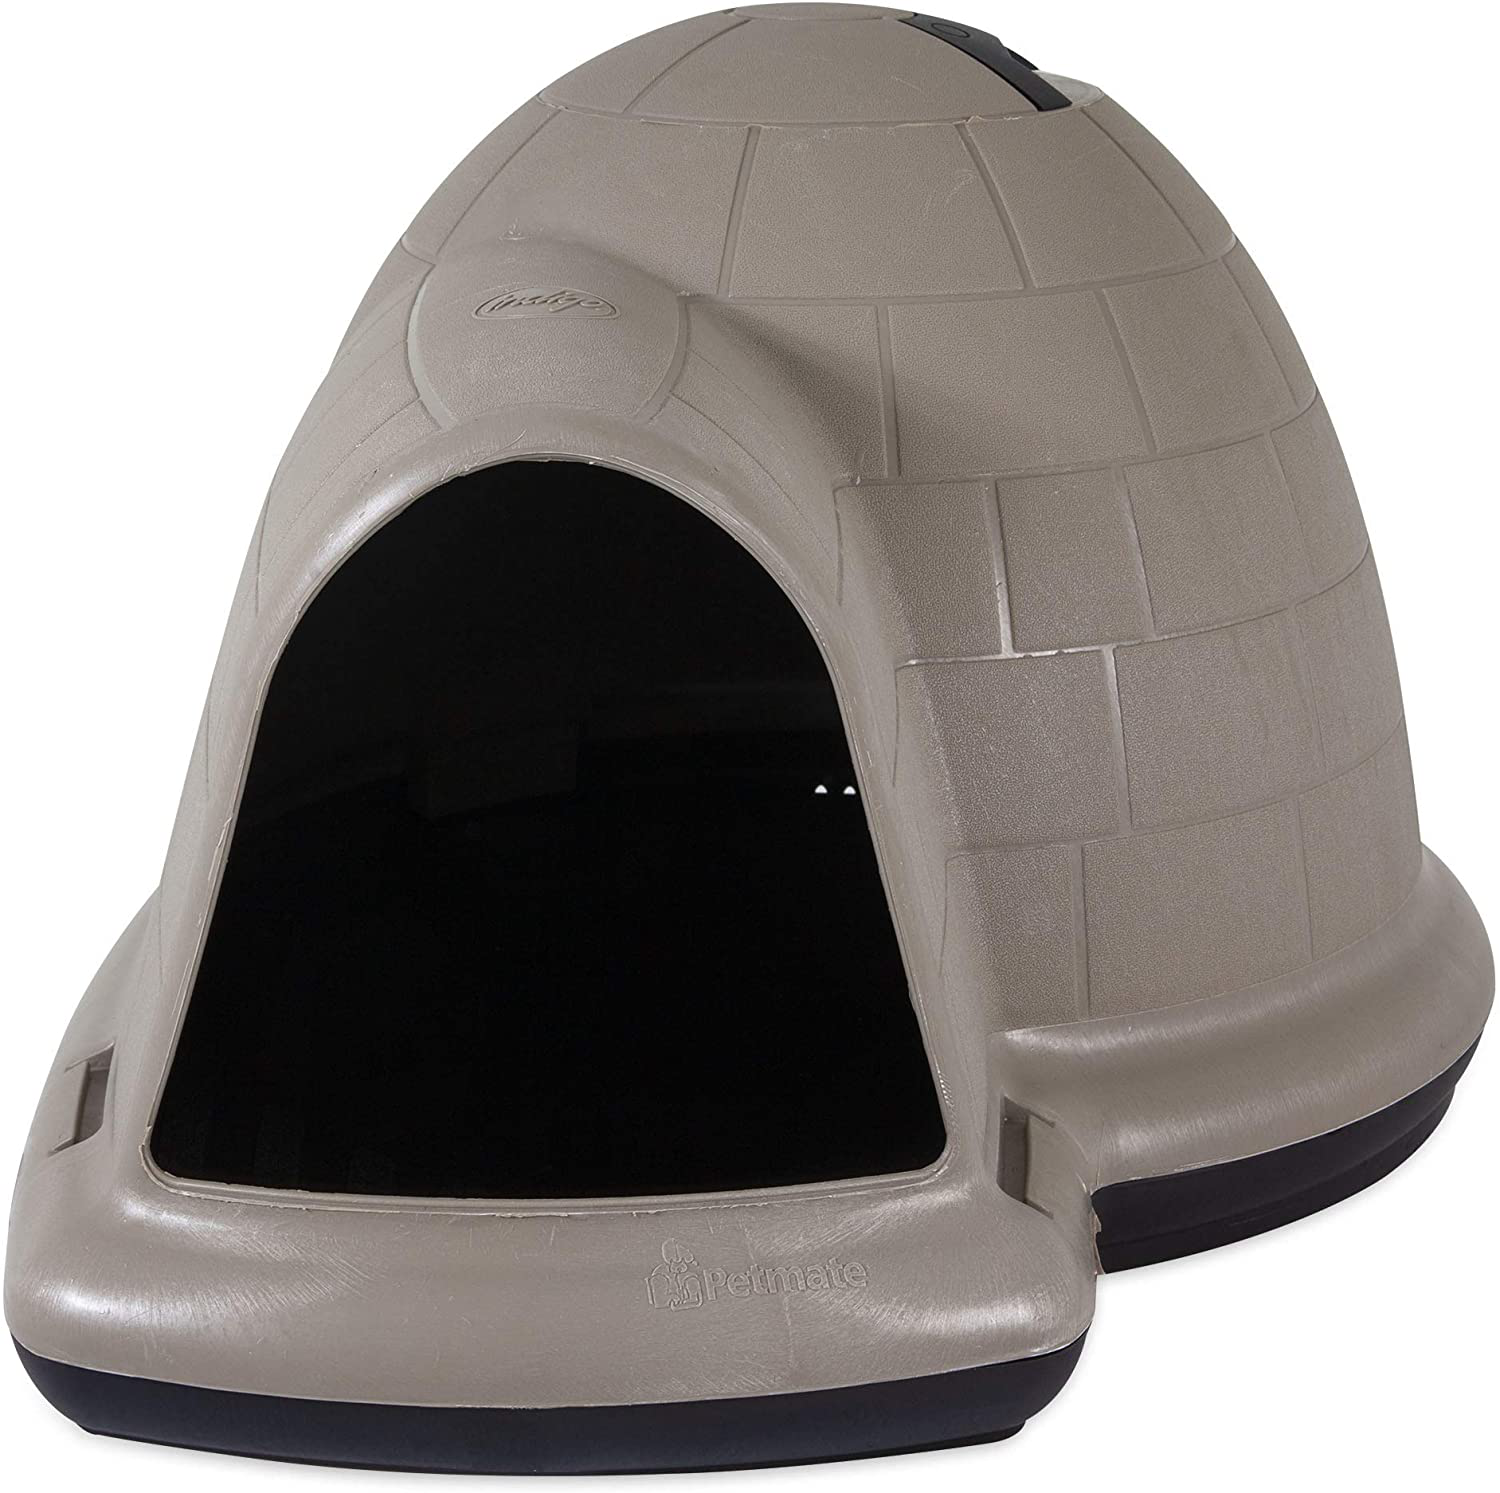 Petmate Indigo Dog House All-Weather Protection Taupe/Black 3 Sizes Available Animals & Pet Supplies > Pet Supplies > Dog Supplies > Dog Houses Petmate   